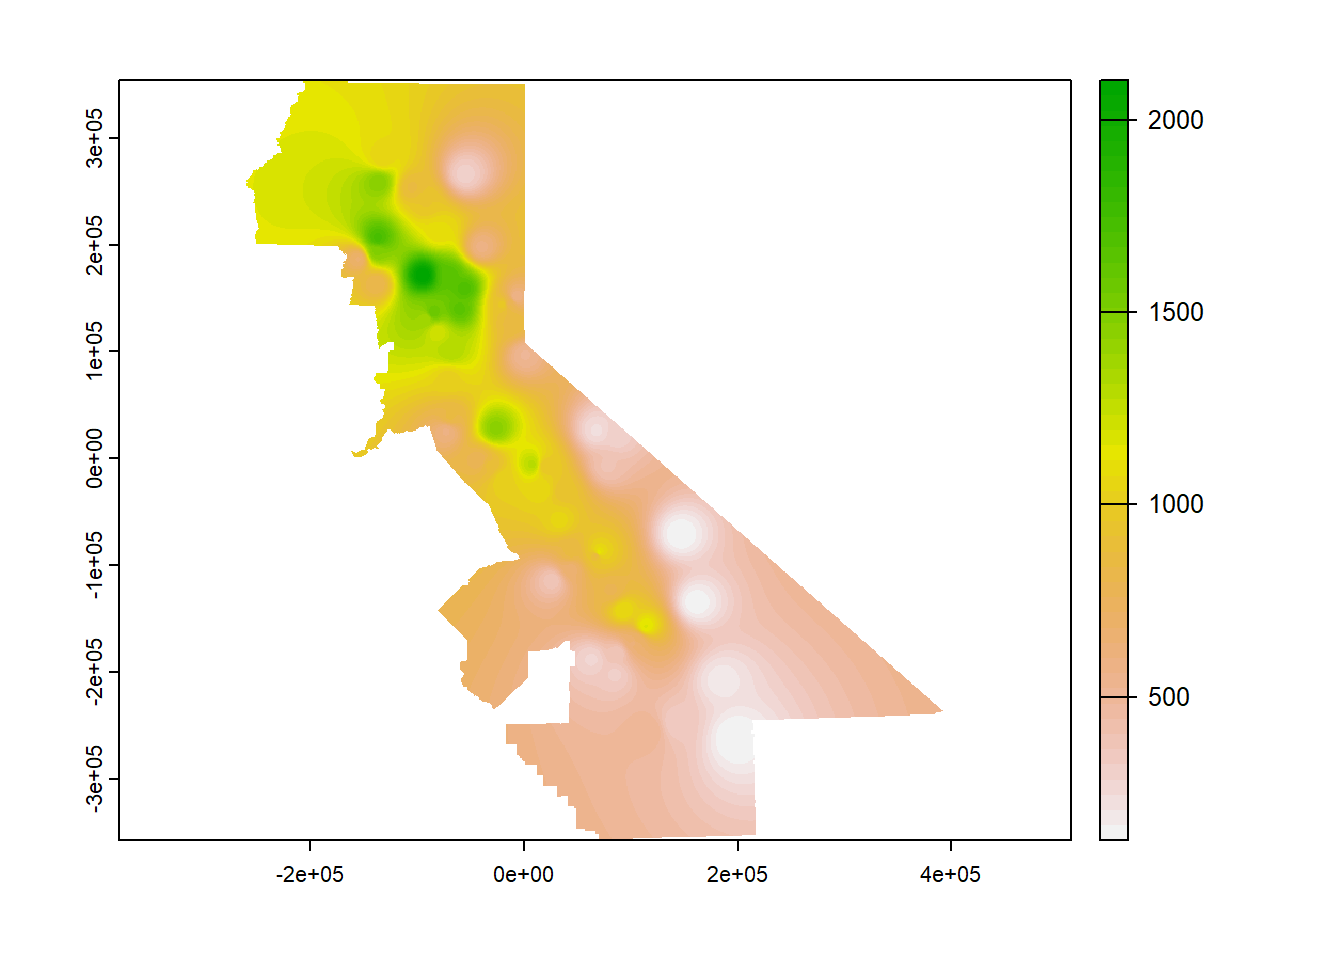 Nearest neighbor interpolation of precipitation